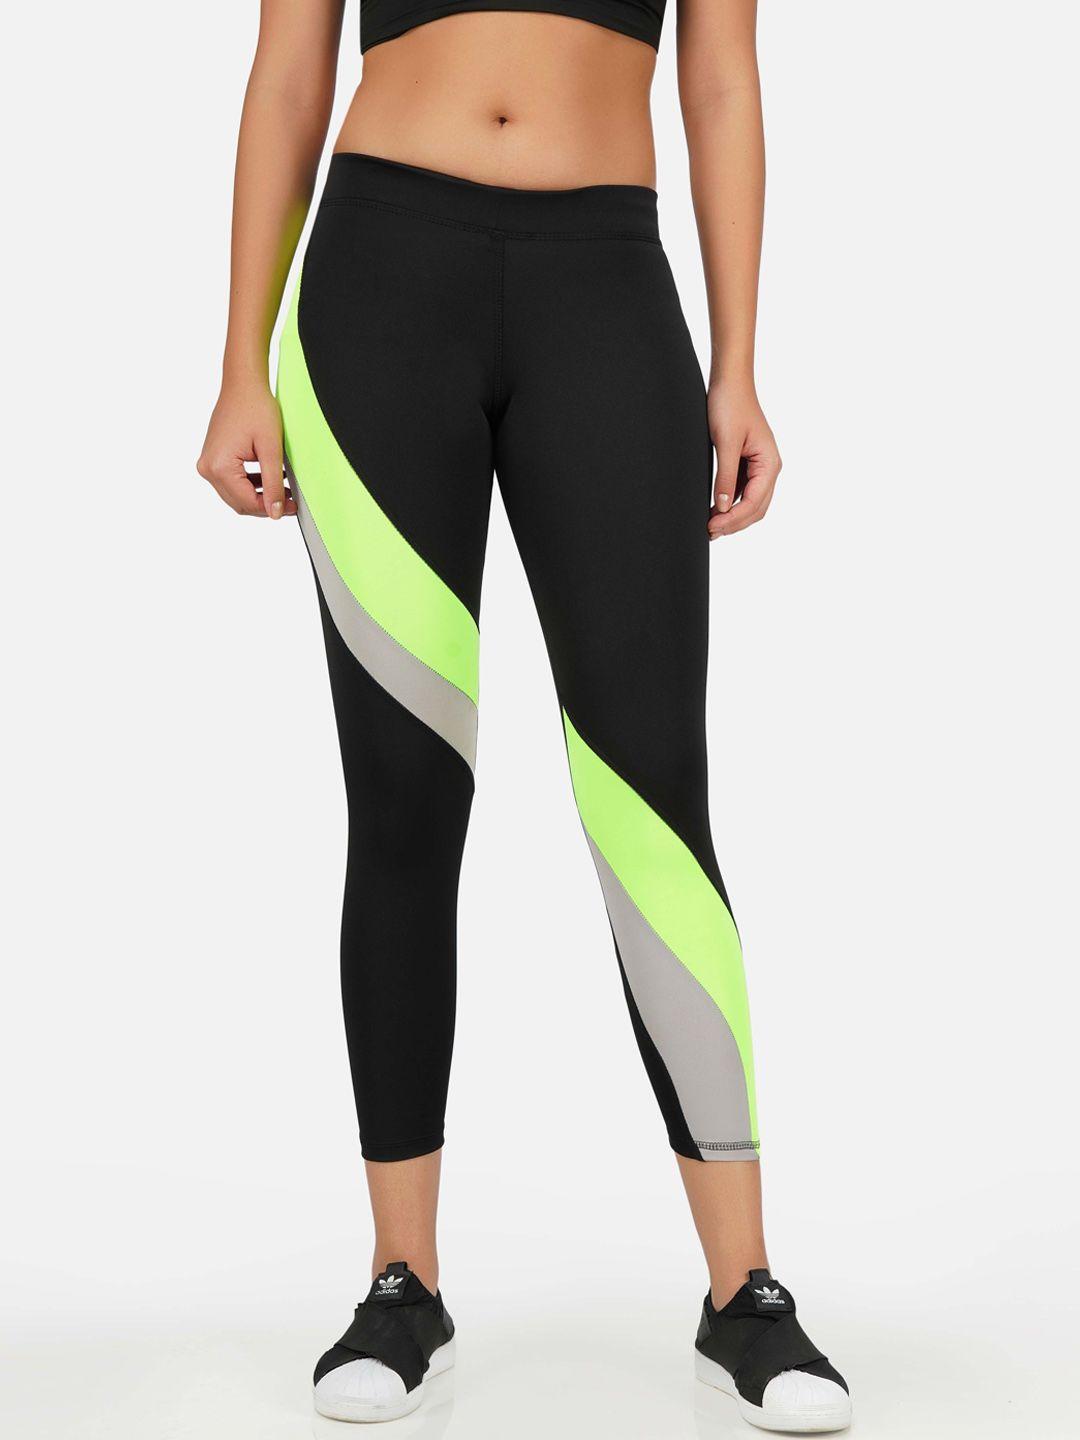 neu look fashion women black & neon colourblocked gym tights